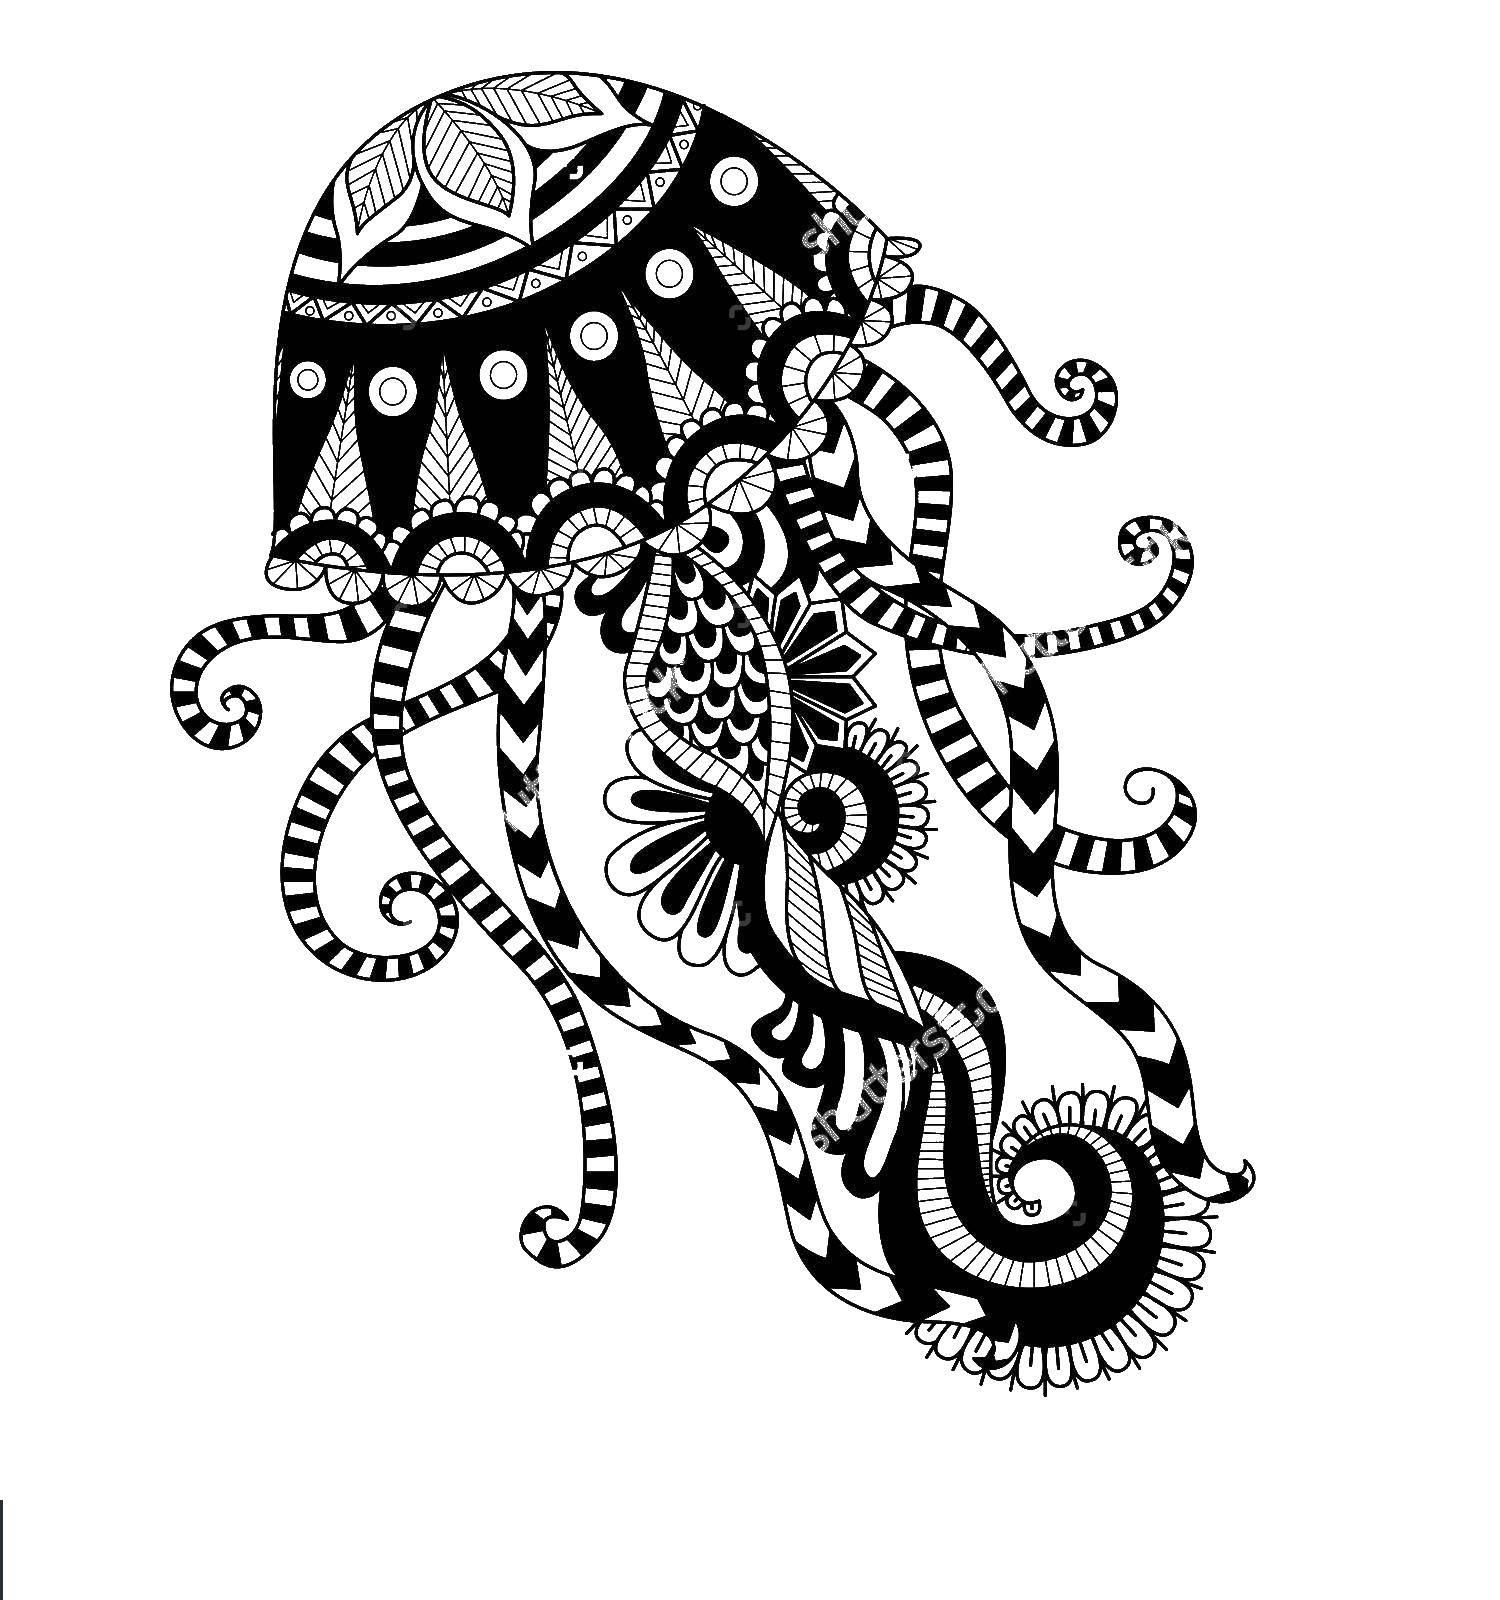 Название: Раскраска Узорная медуза. Категория: Морские обитатели. Теги: Подводный мир, медуза.